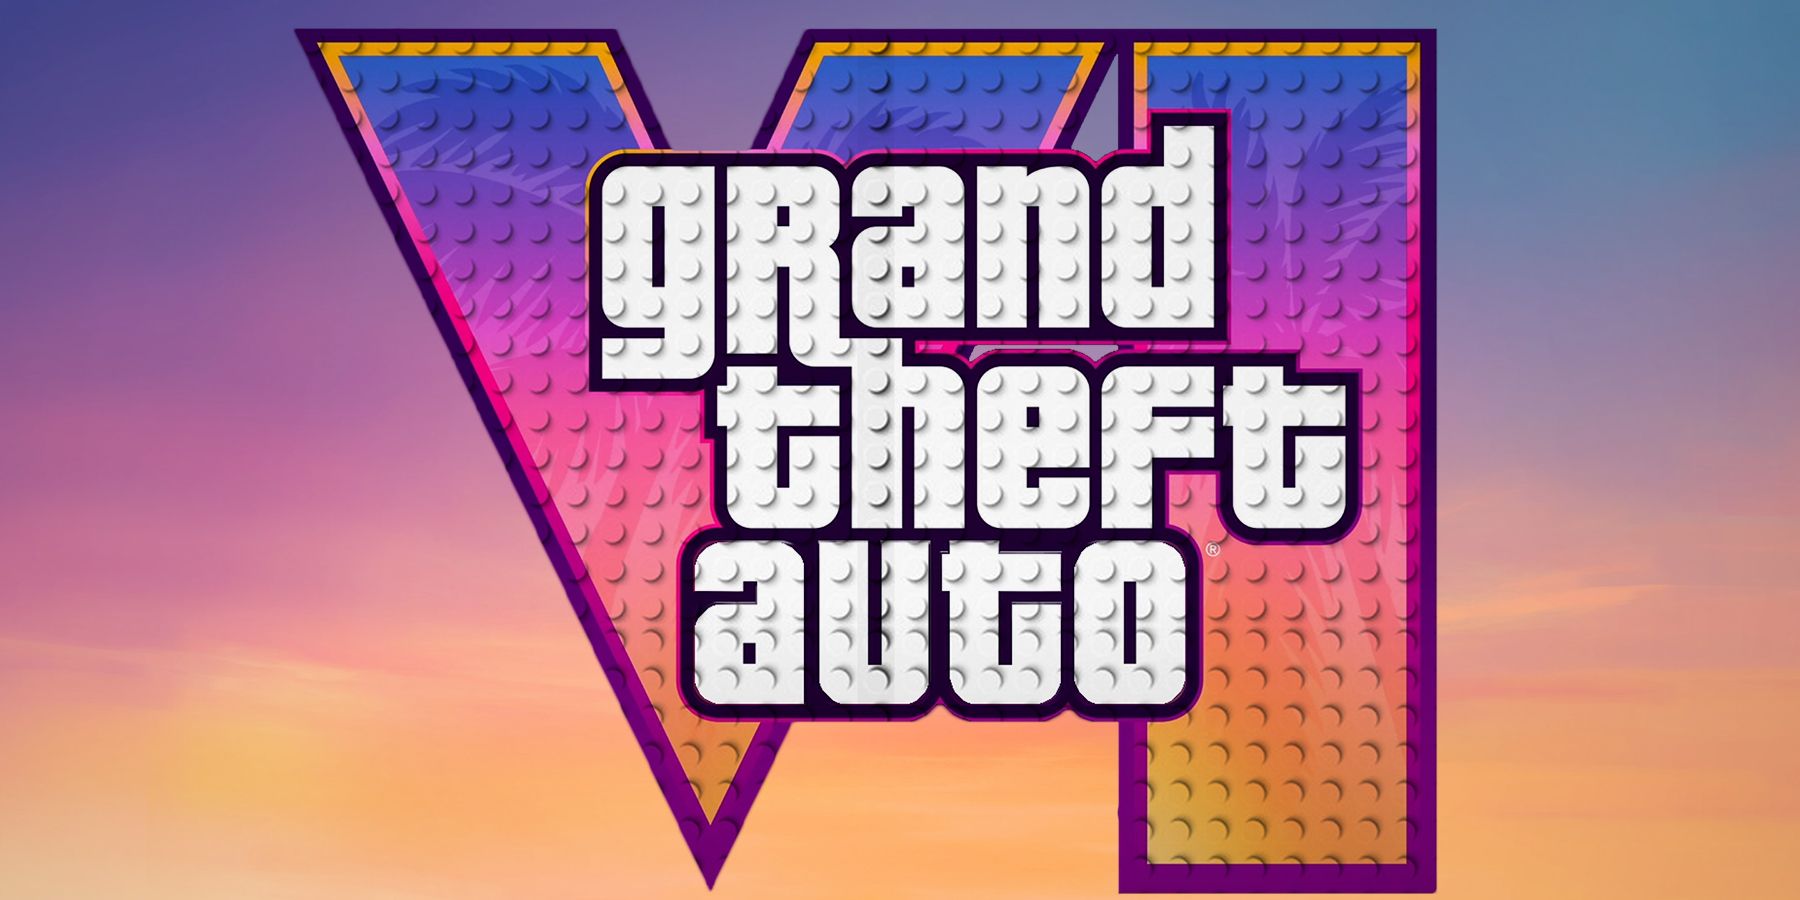 Grand Theft Auto 6 logo with lego bricks texture